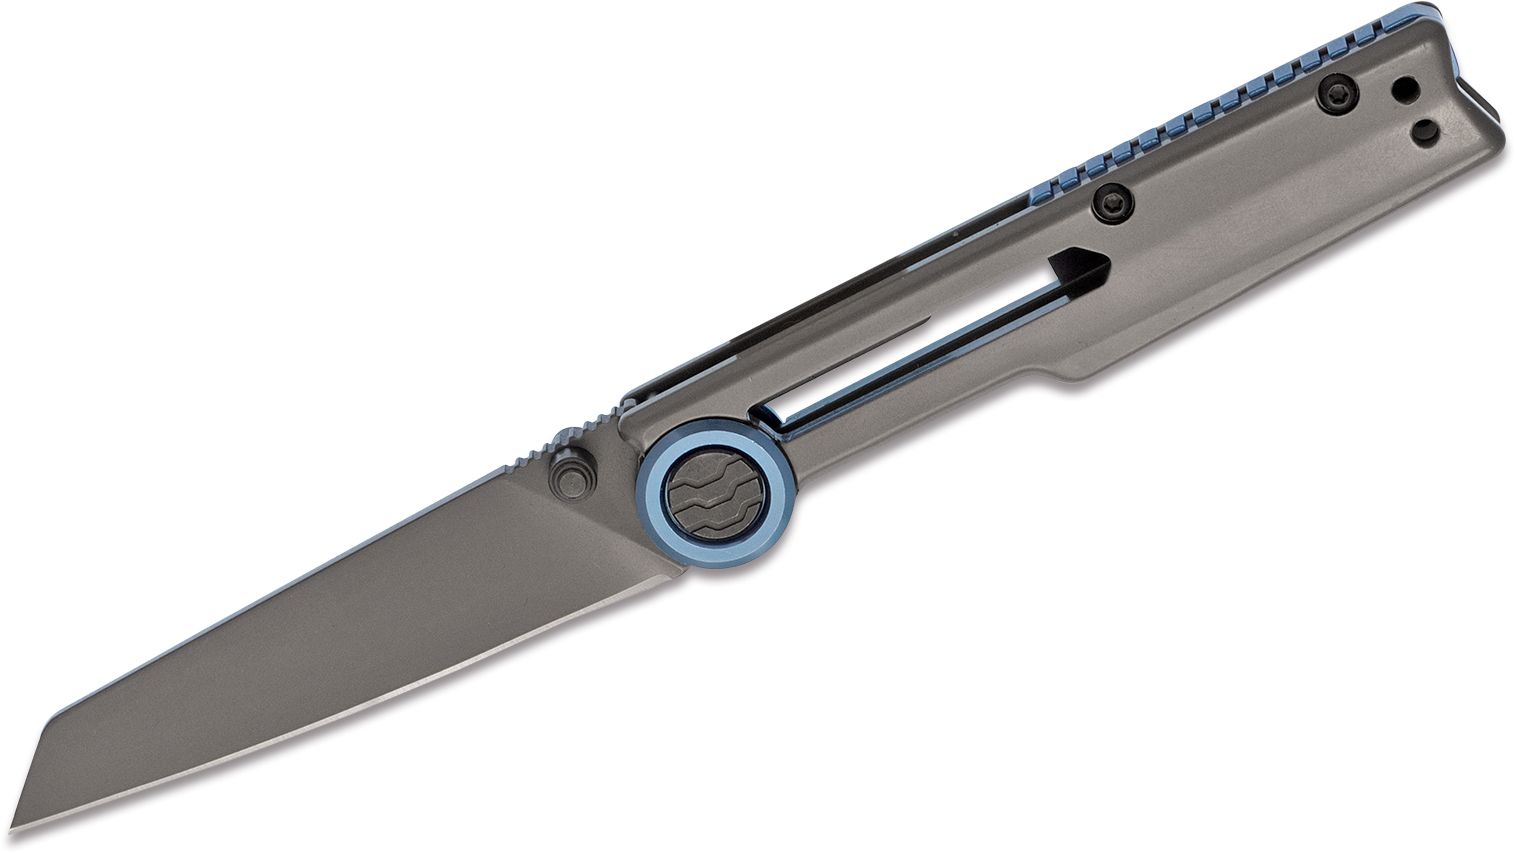  Folding Pocket Knife, 3 inch 8Cr13MoV Stainless Steel